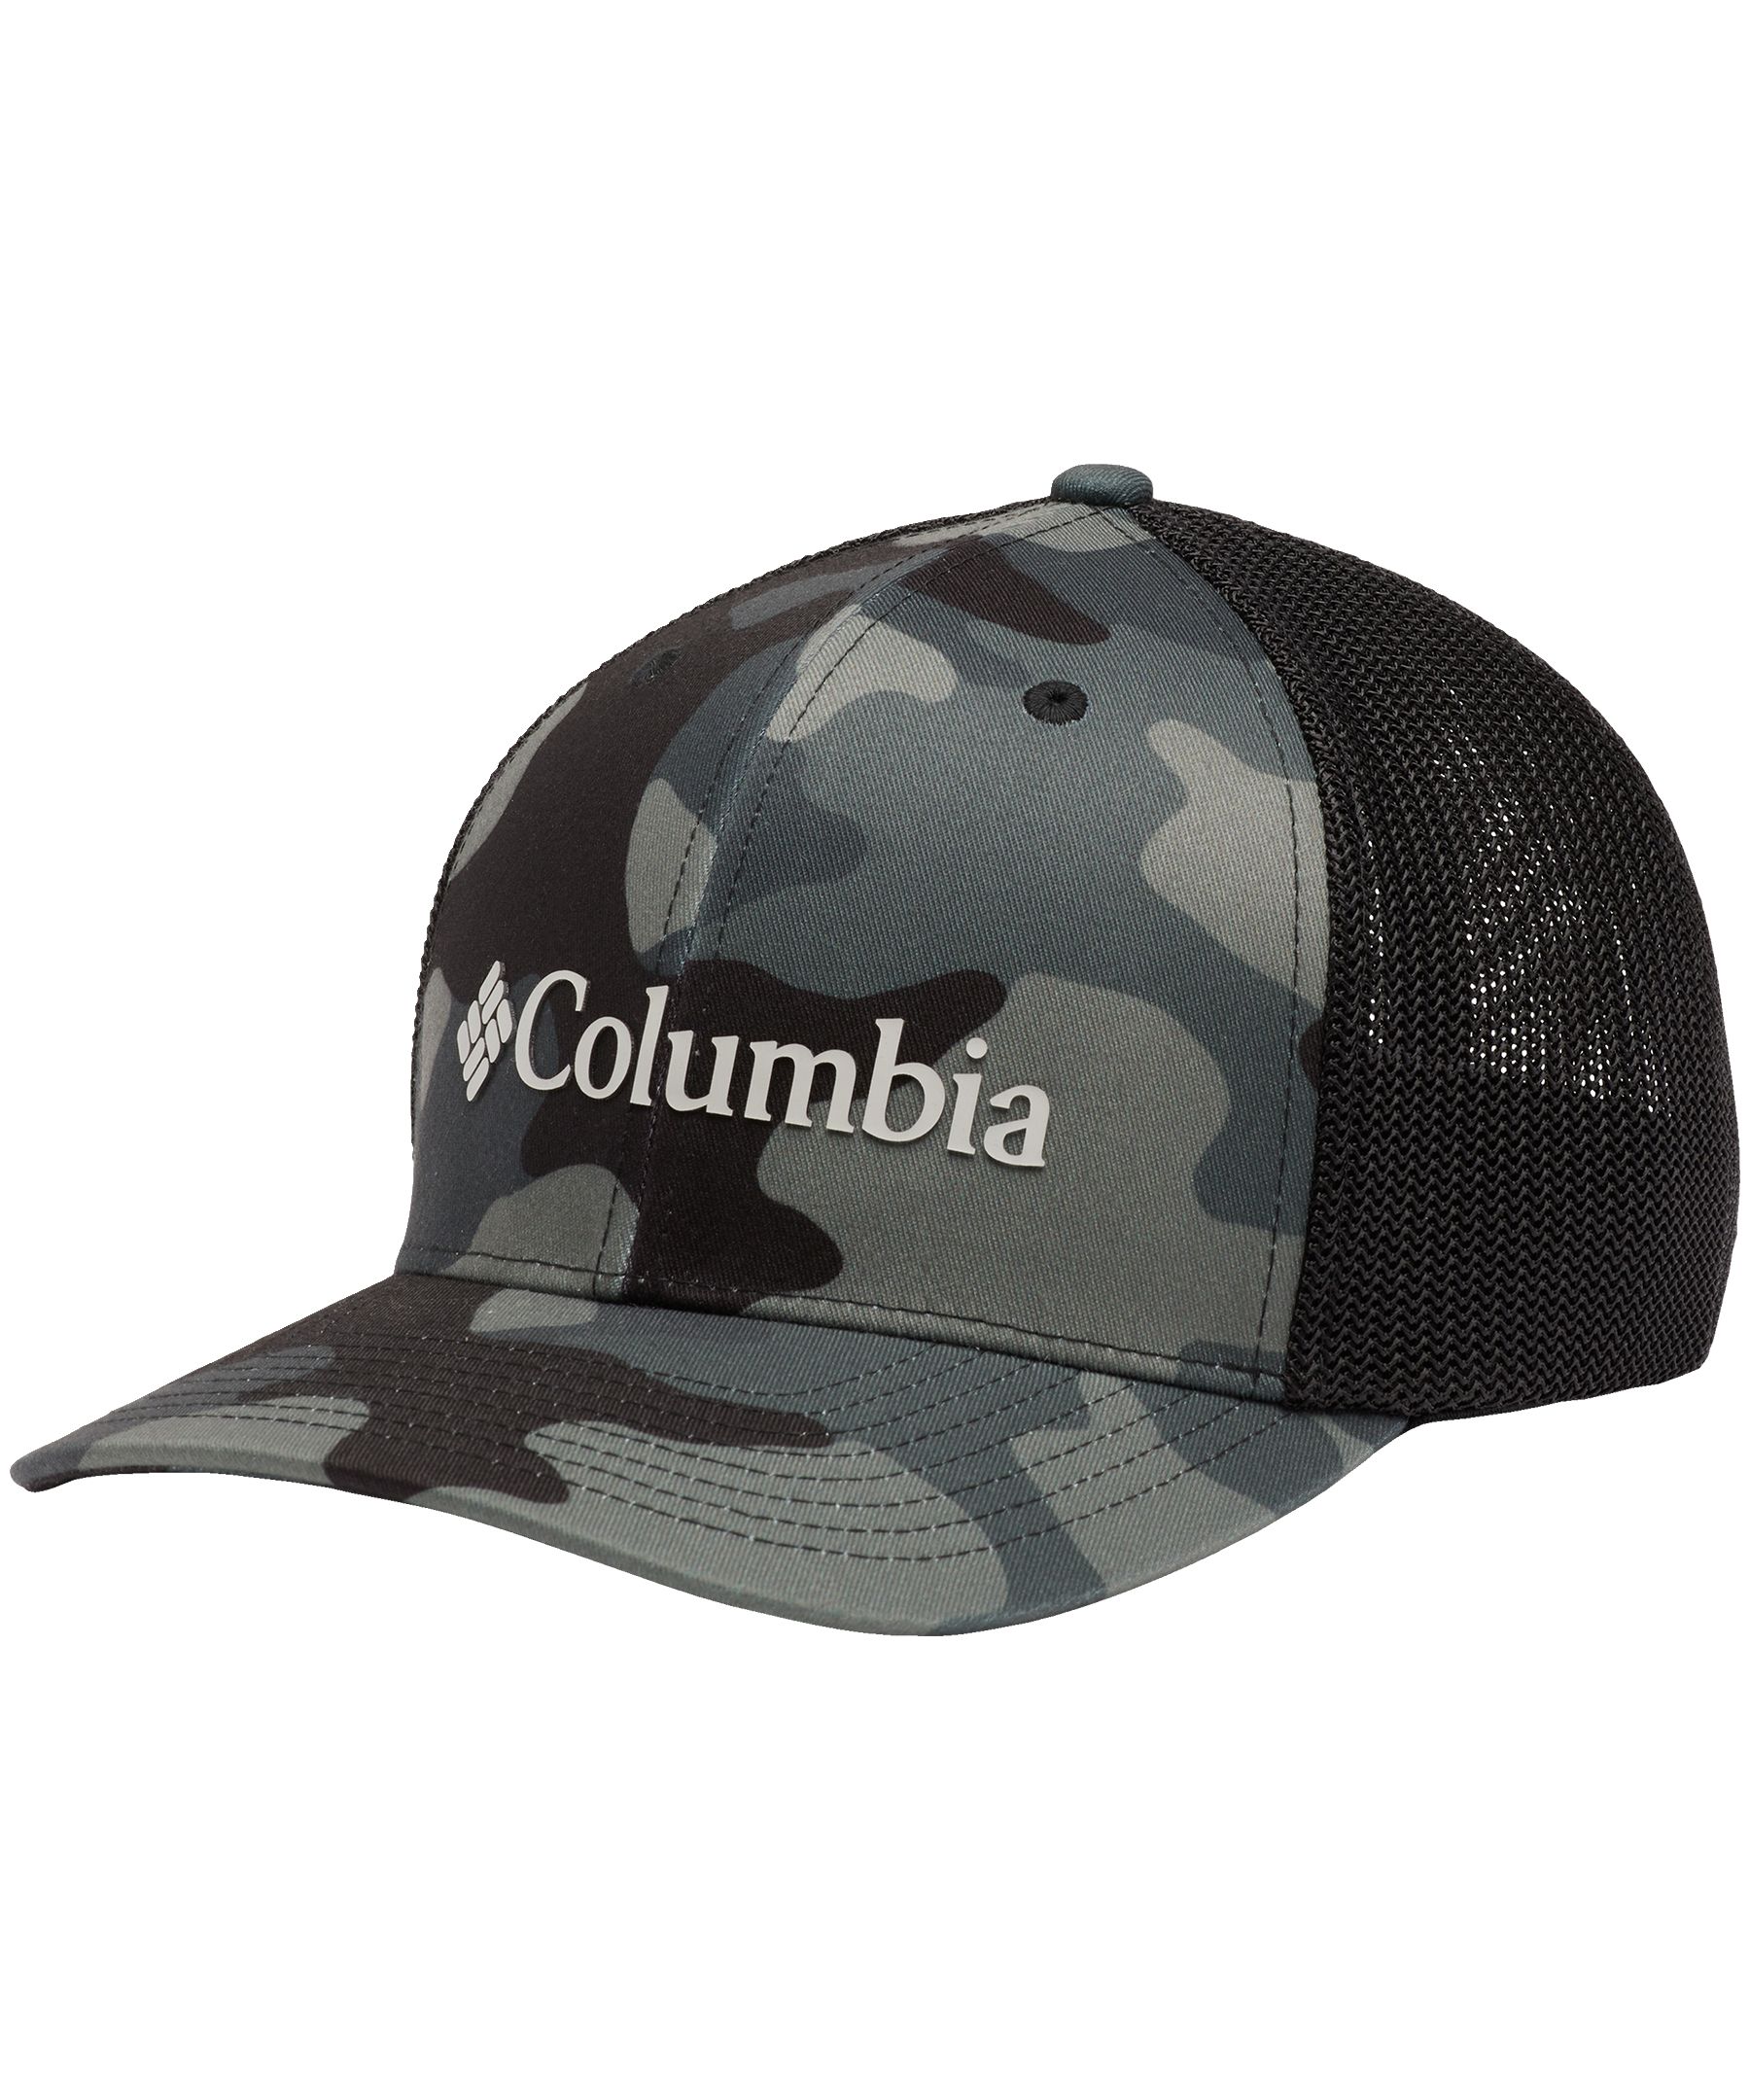 Columbia Unisex-Adult Mesh Ball Cap